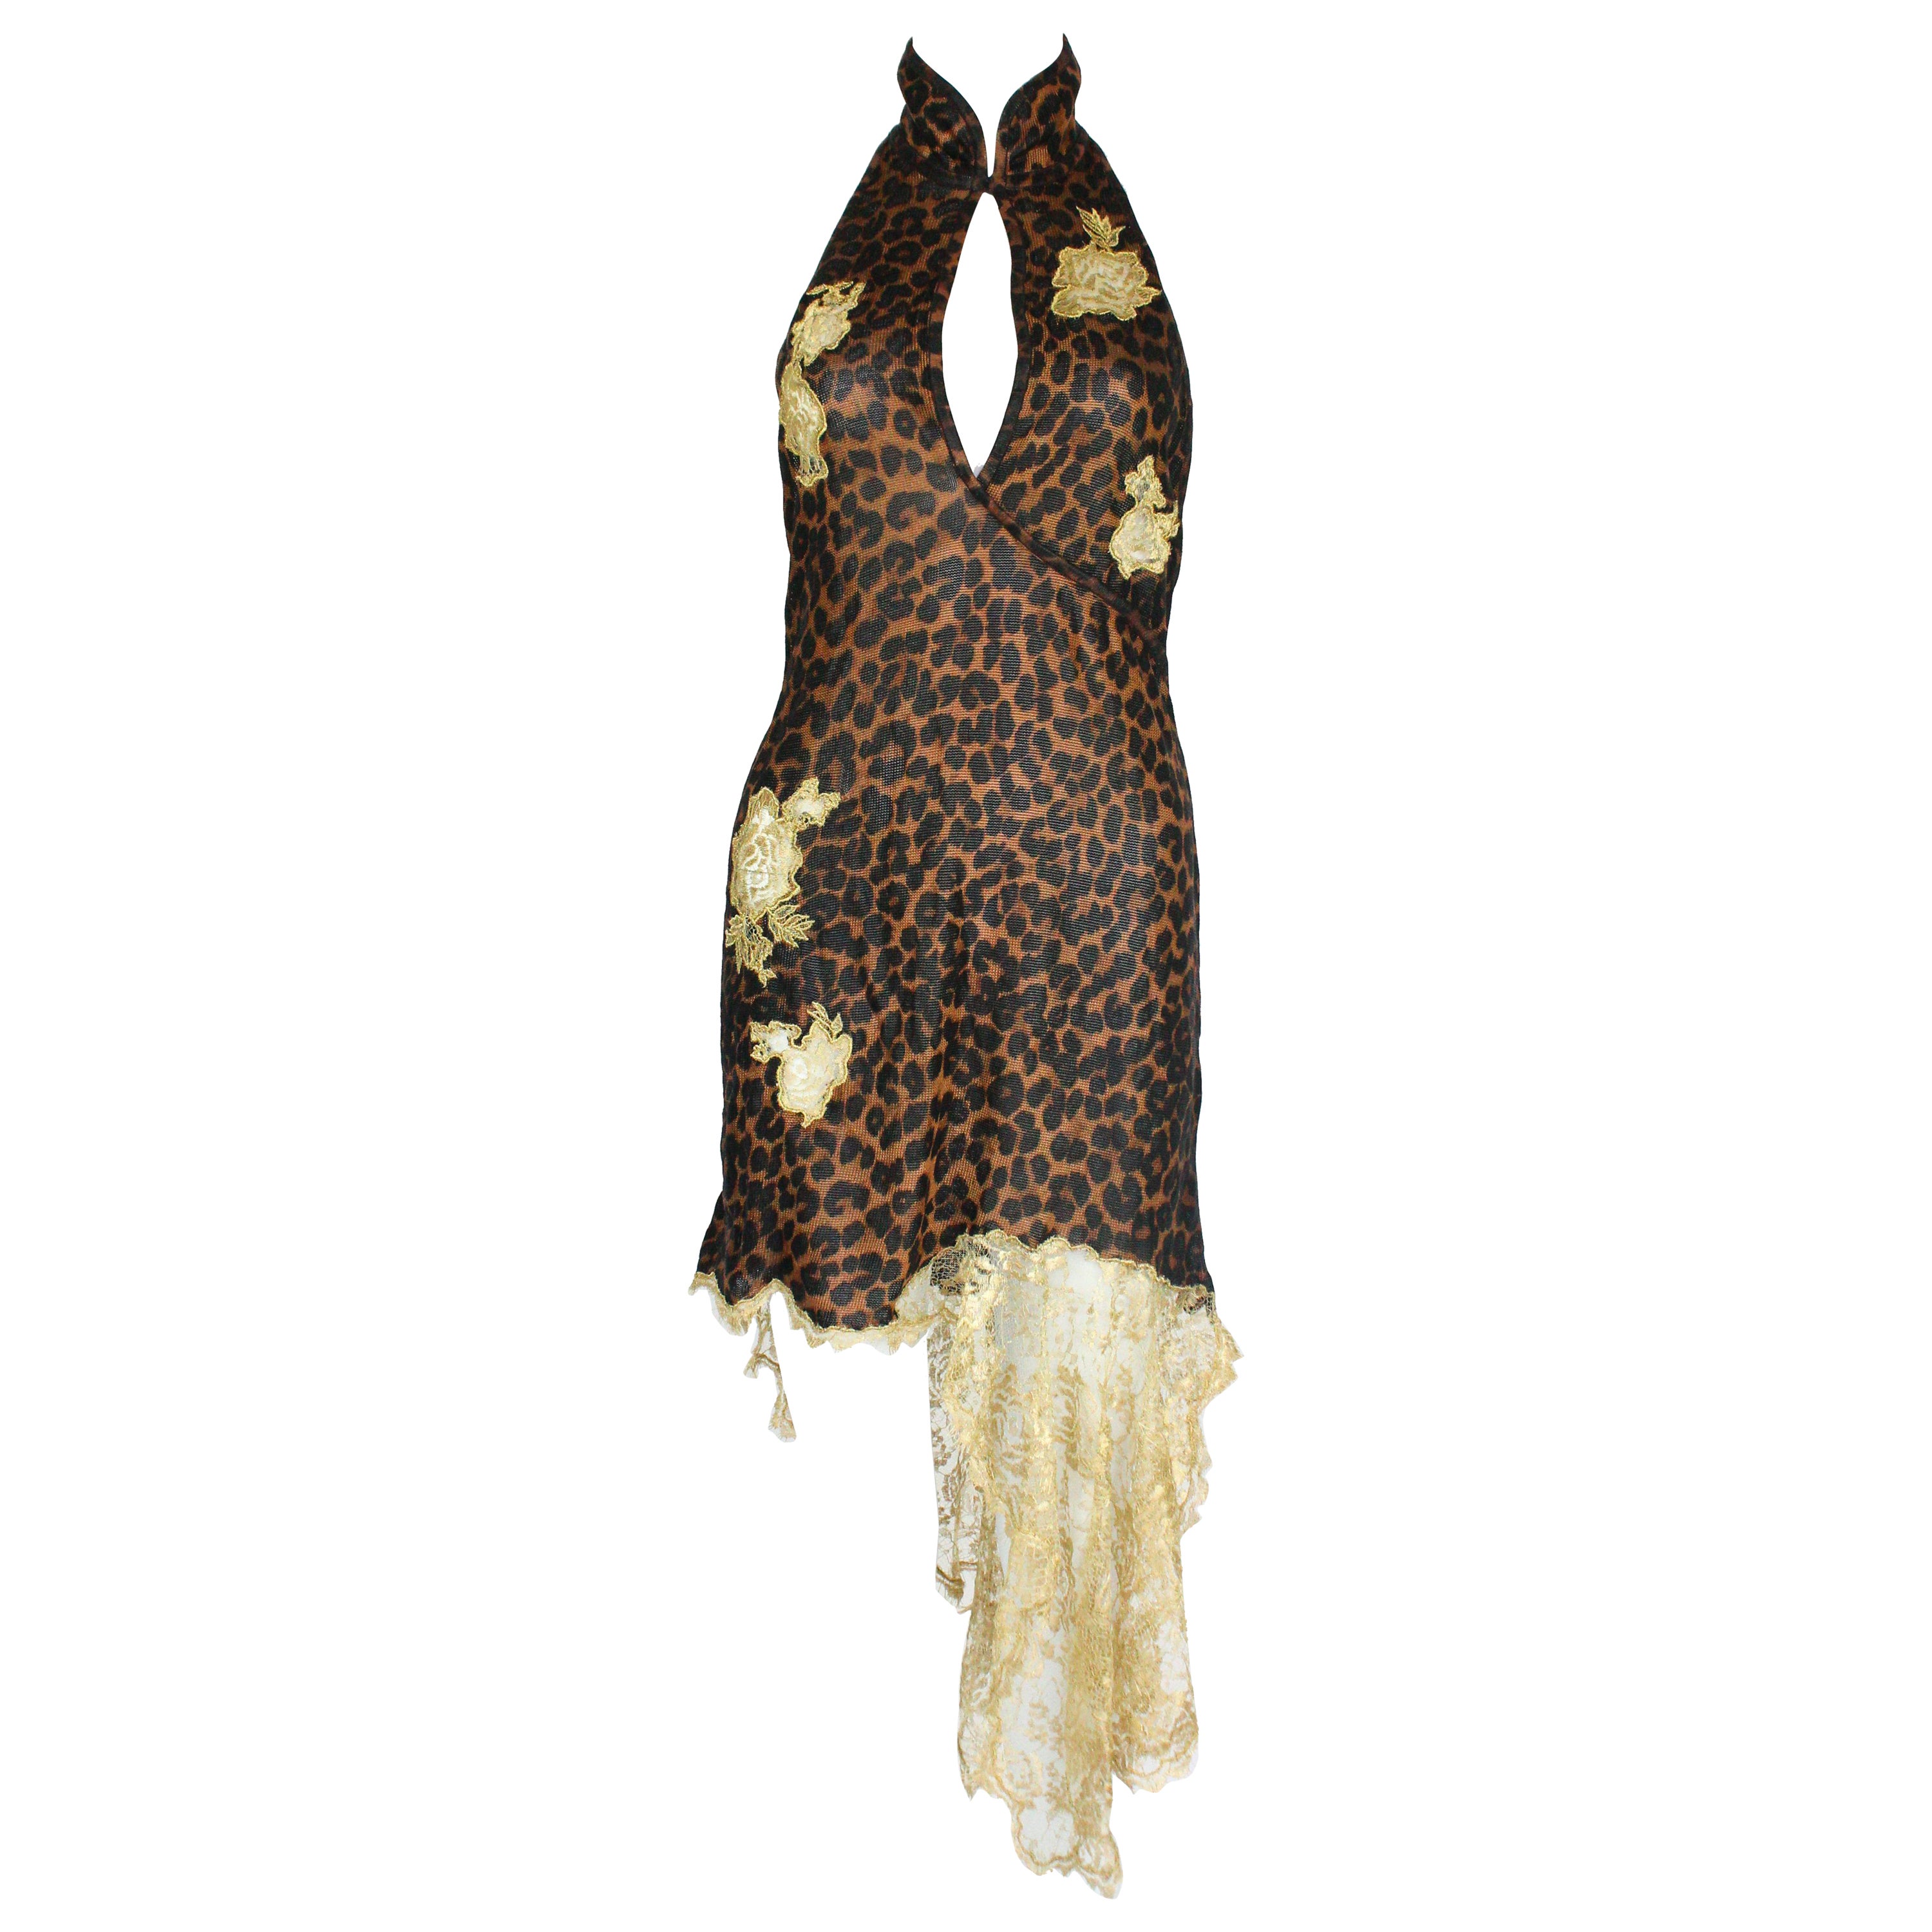 Christian Dior by John Galliano Leopard Dress F/W 2000 For Sale